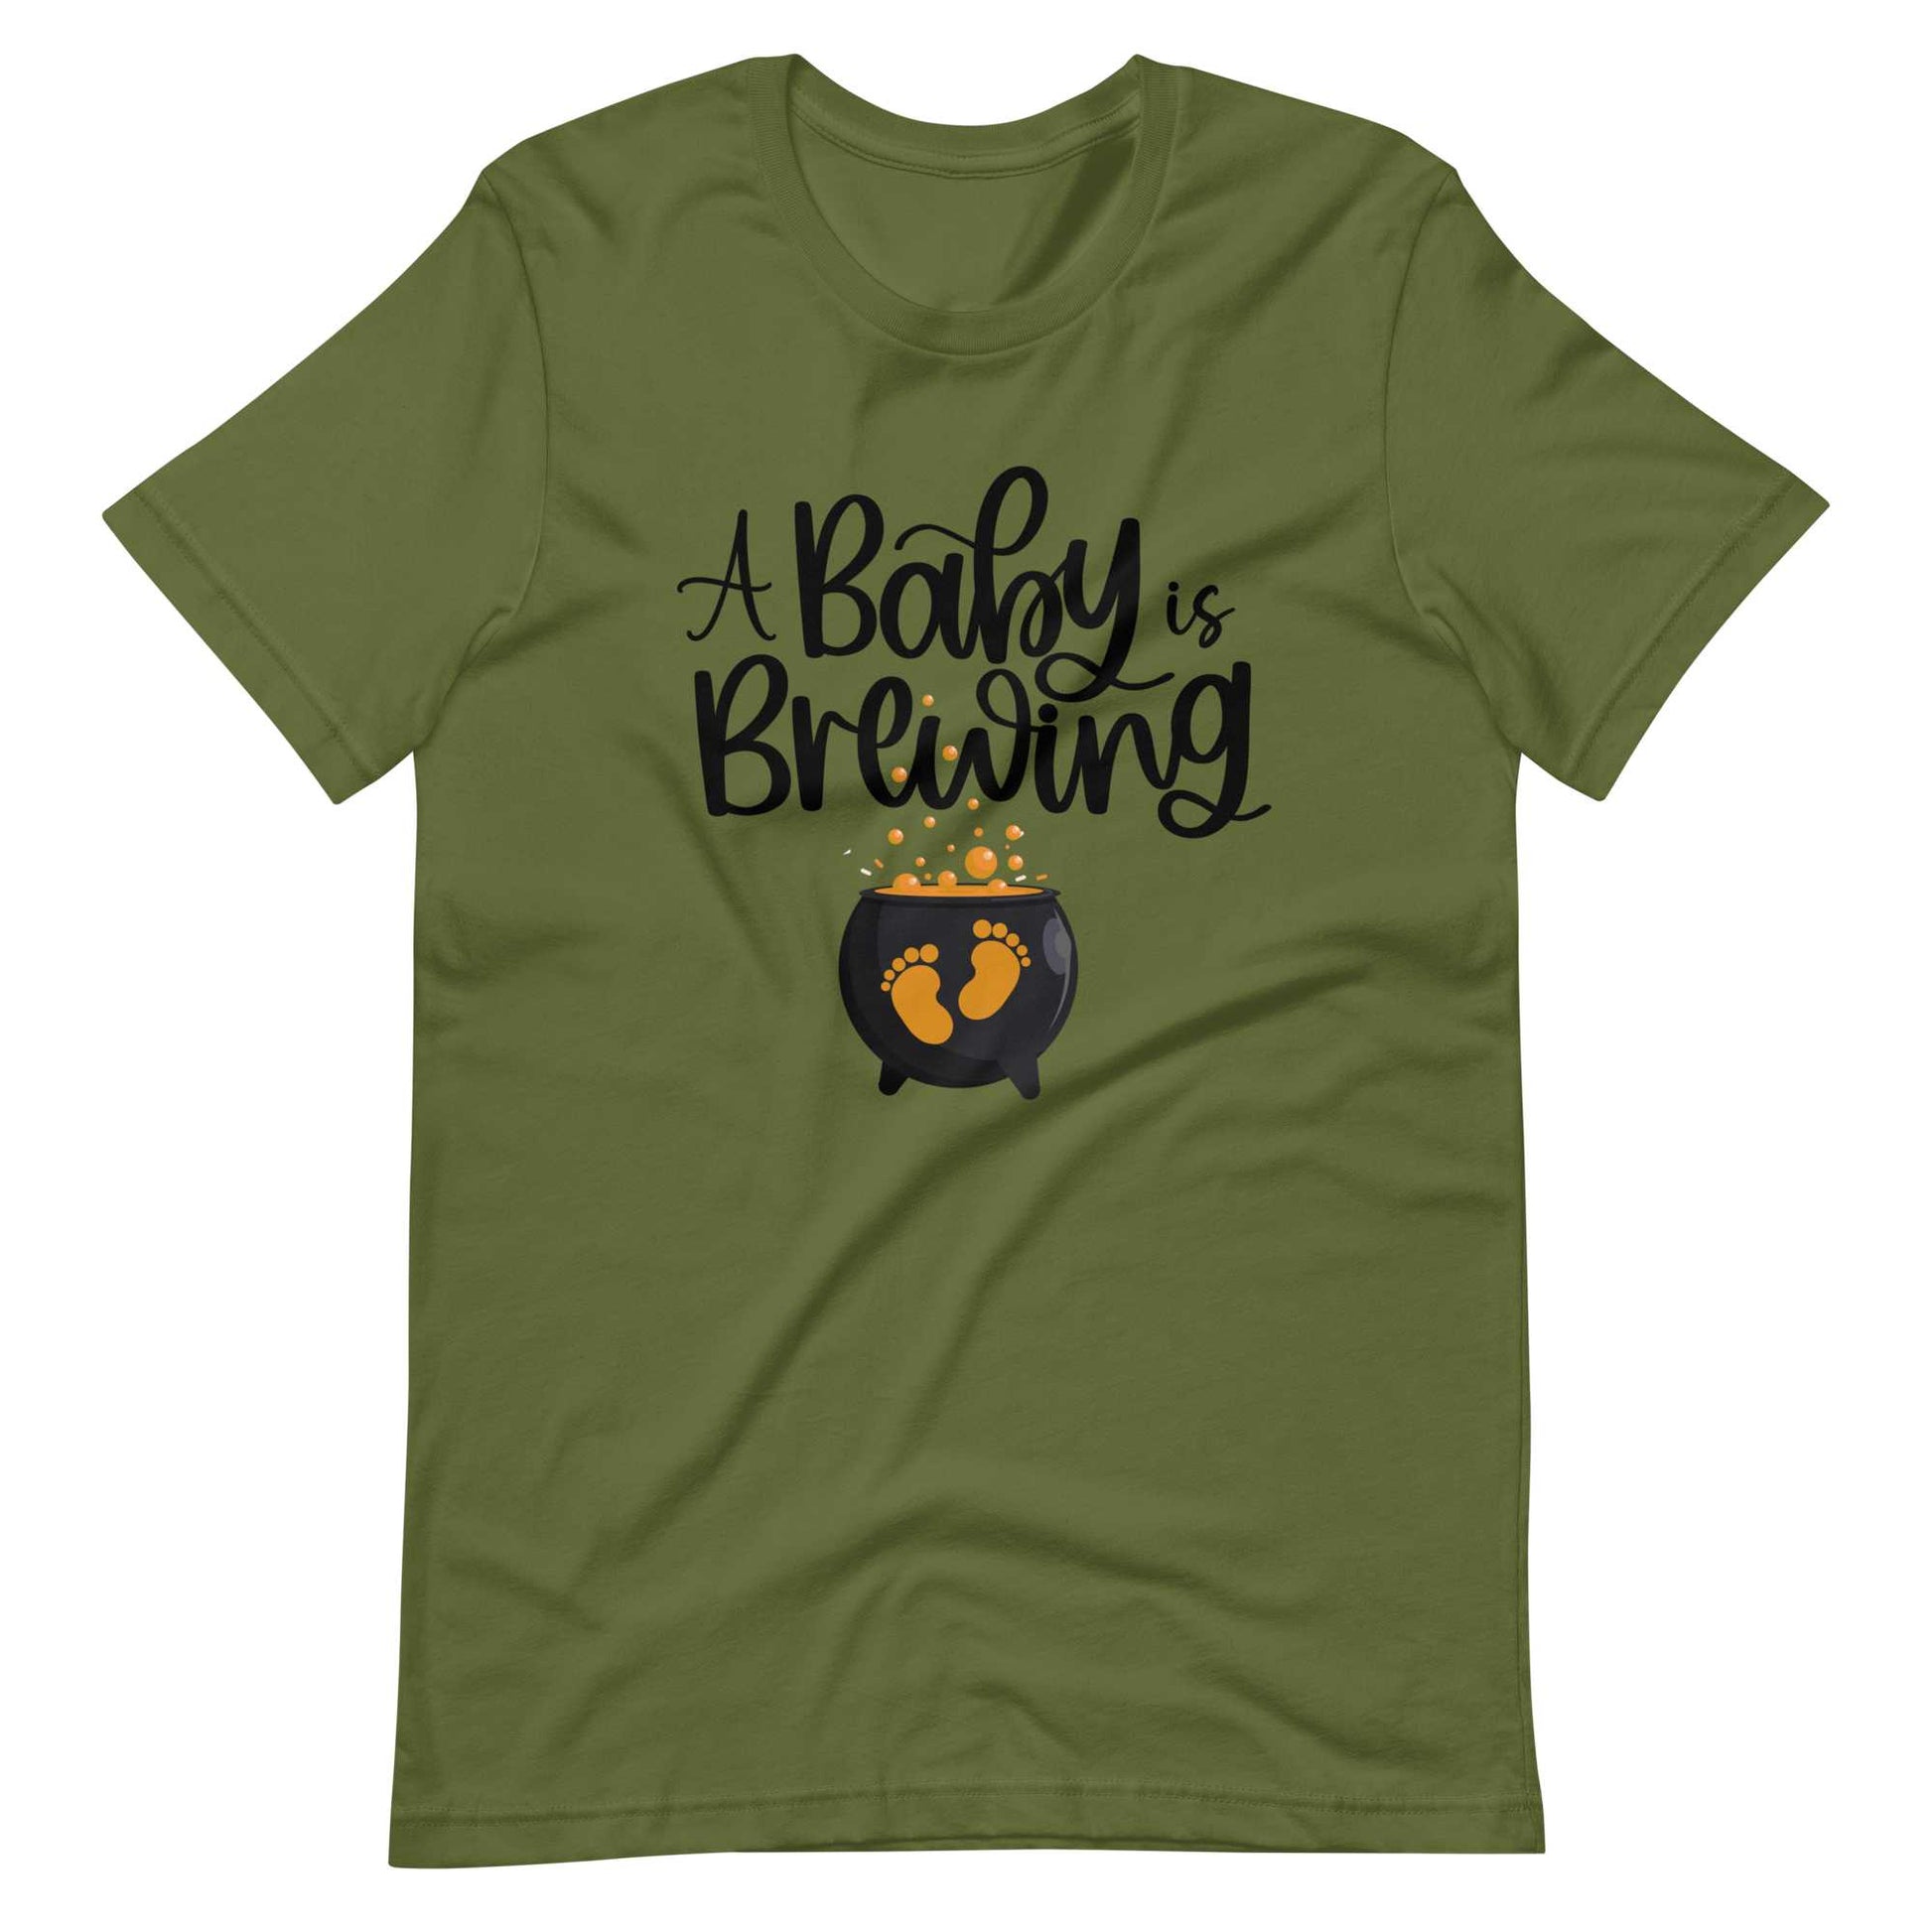 Baby is Brewing Halloween Pregnancy Shirt, Maternity Halloween Tee, Cute Fall Pregnancy Reveal Tshirt Amazing Faith Designs